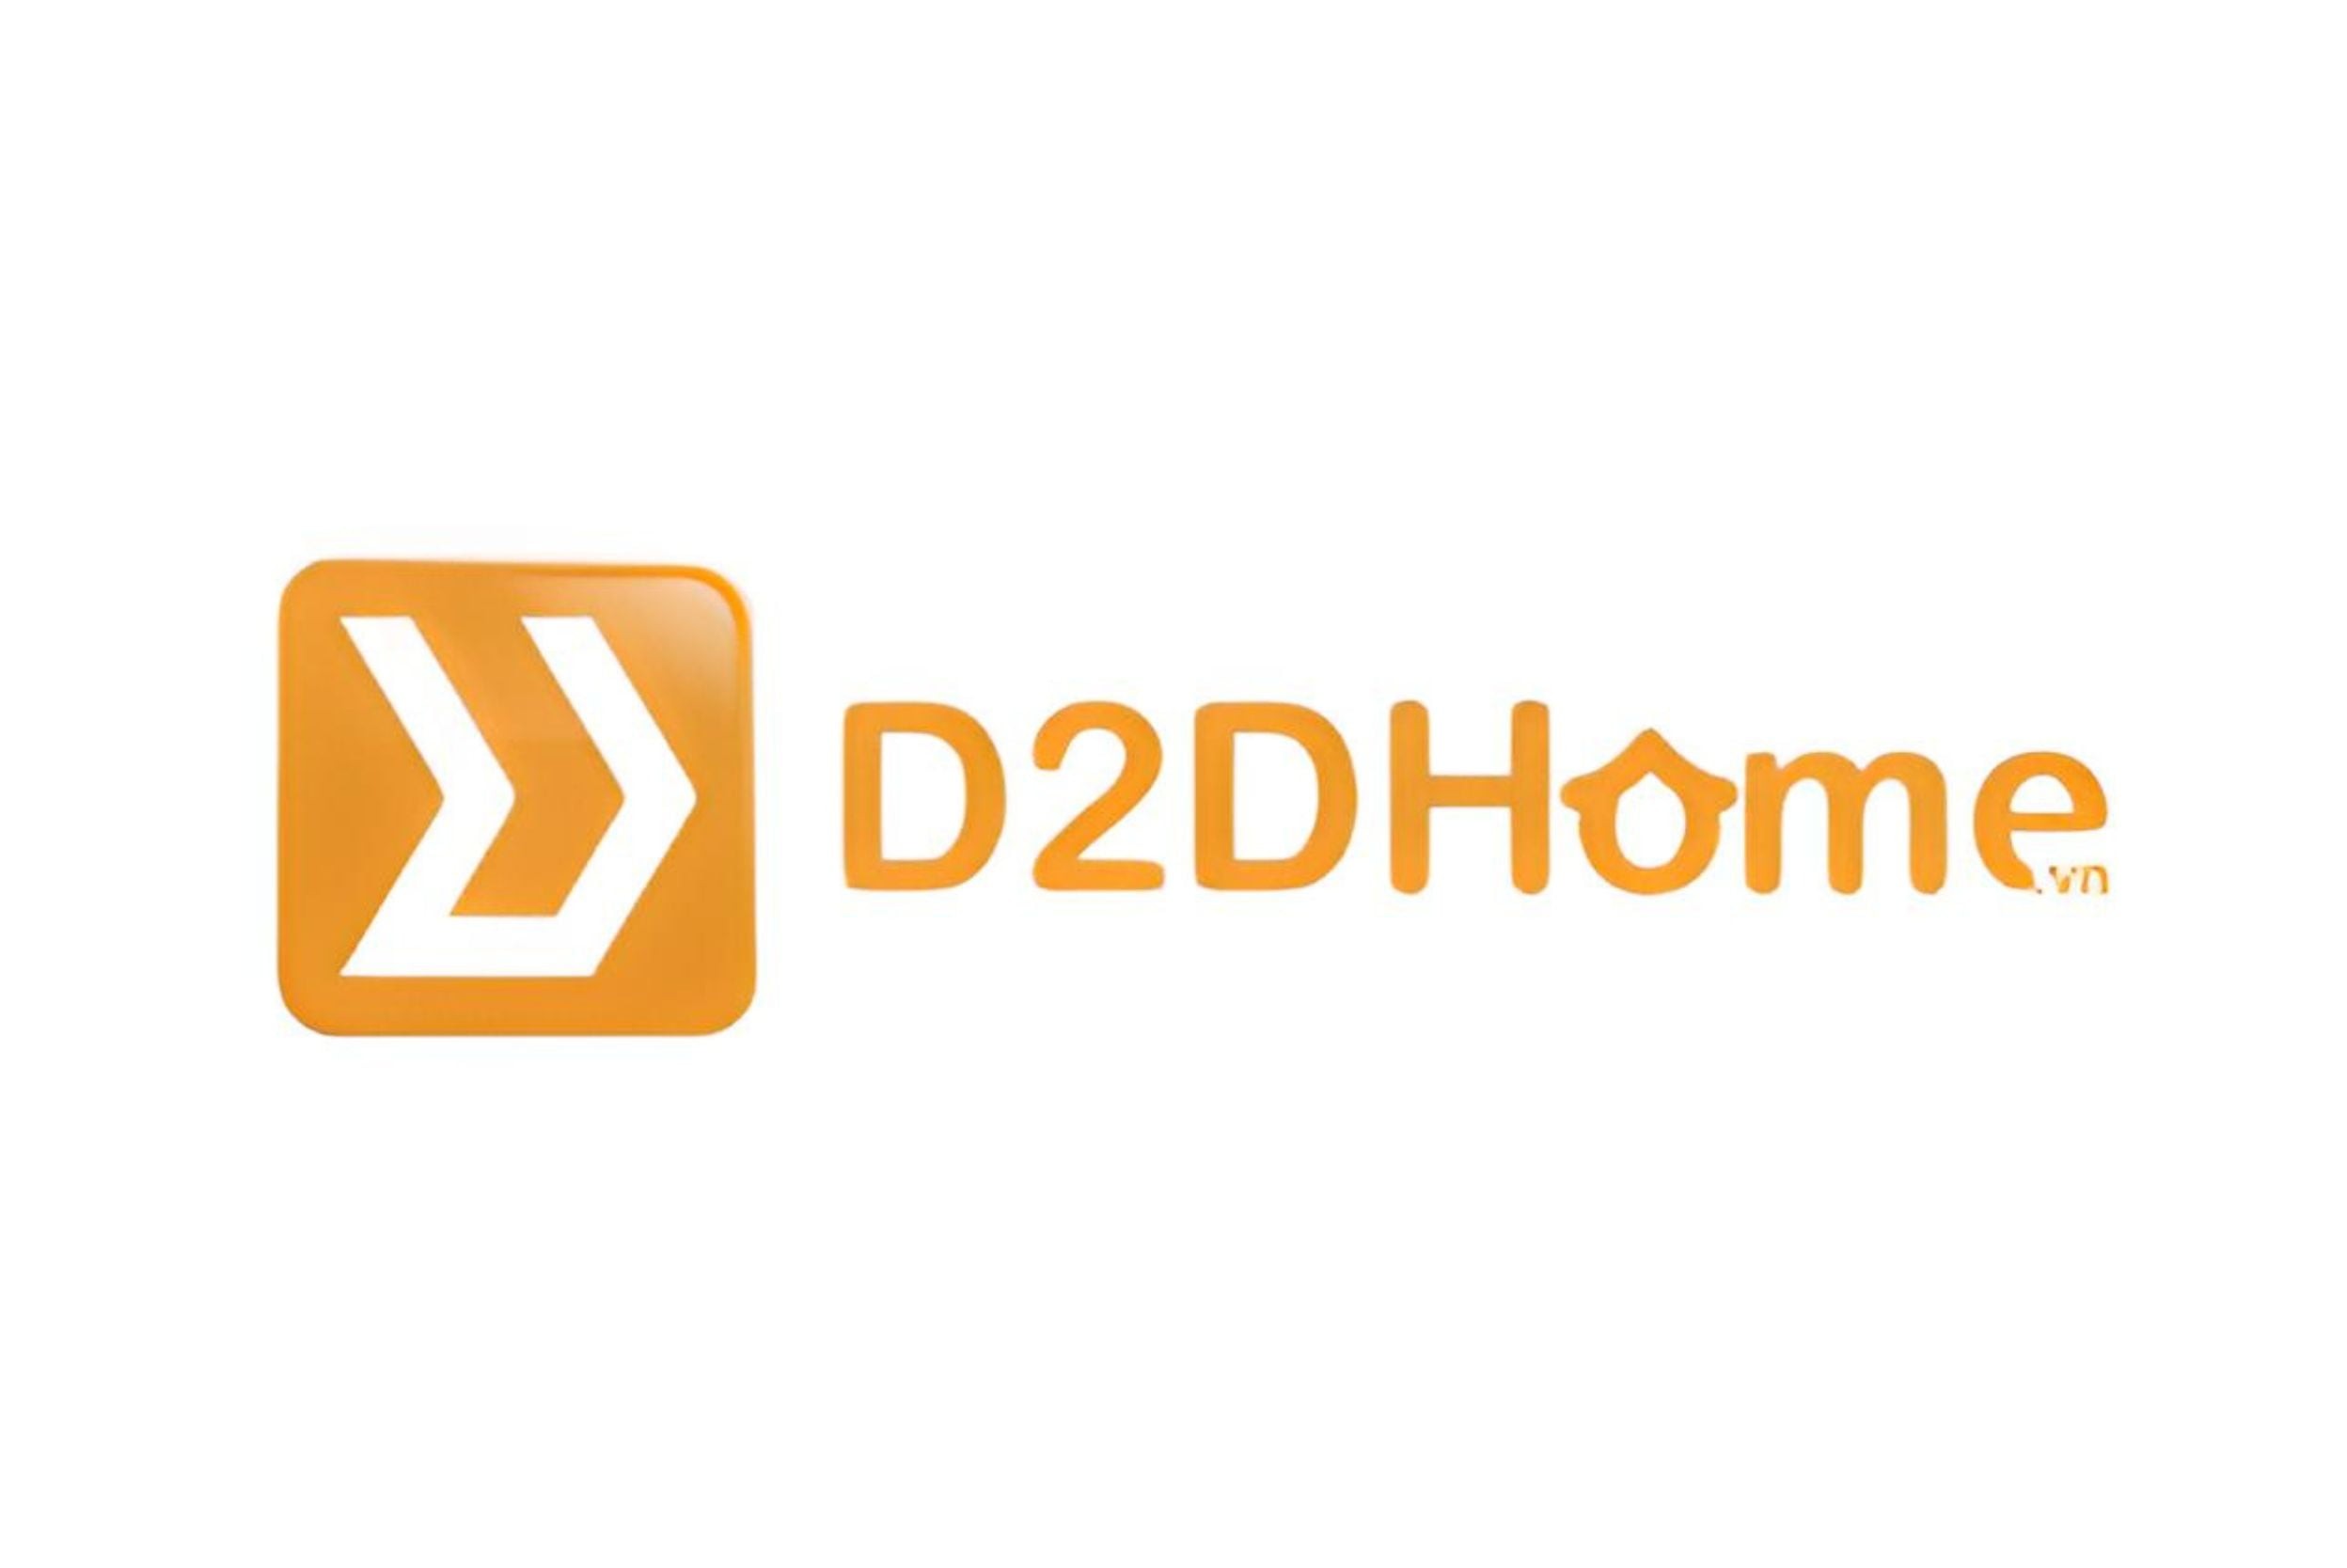 d2dhome-logo (1).jpg